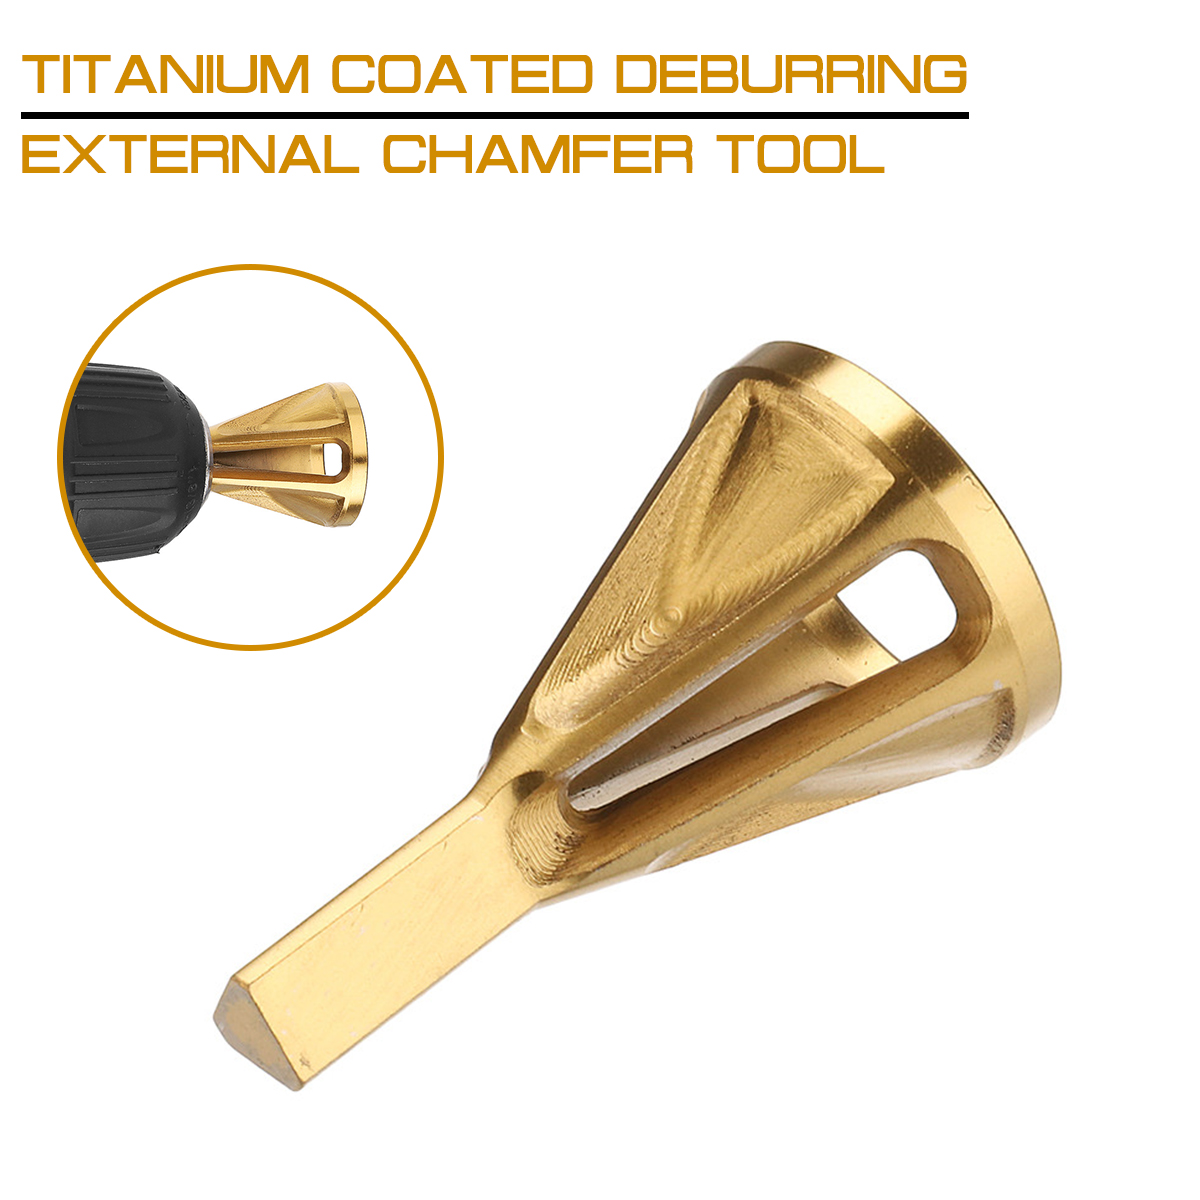 Deburring Chamfer External Tool Bit Titanium Coated Remove Burr Repairs Tools